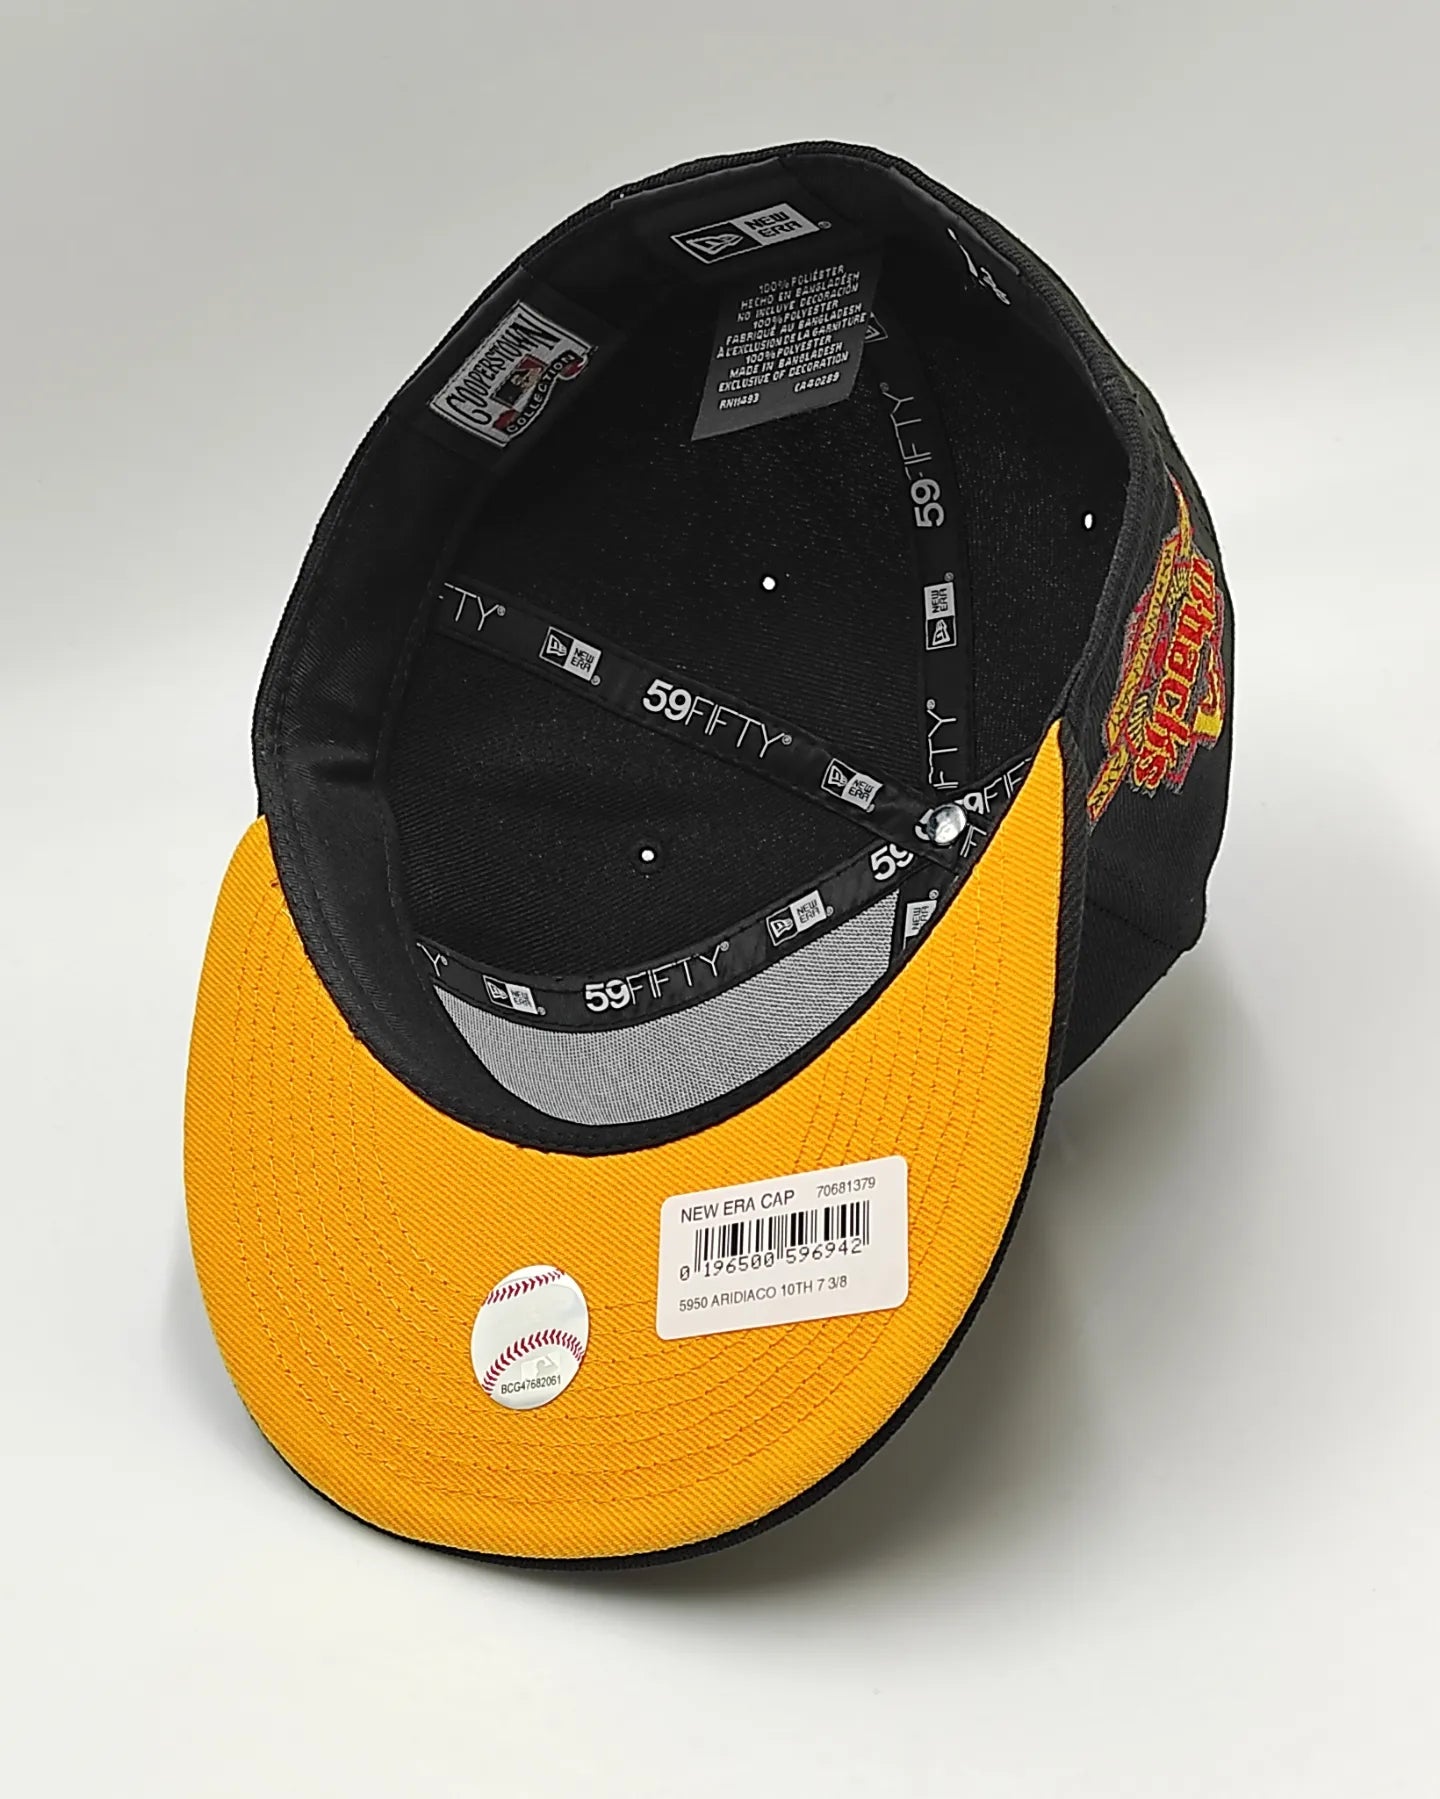 New Era Arizona diamondbacks 10th anniversary fire metallic edition 59fifty fitted hat